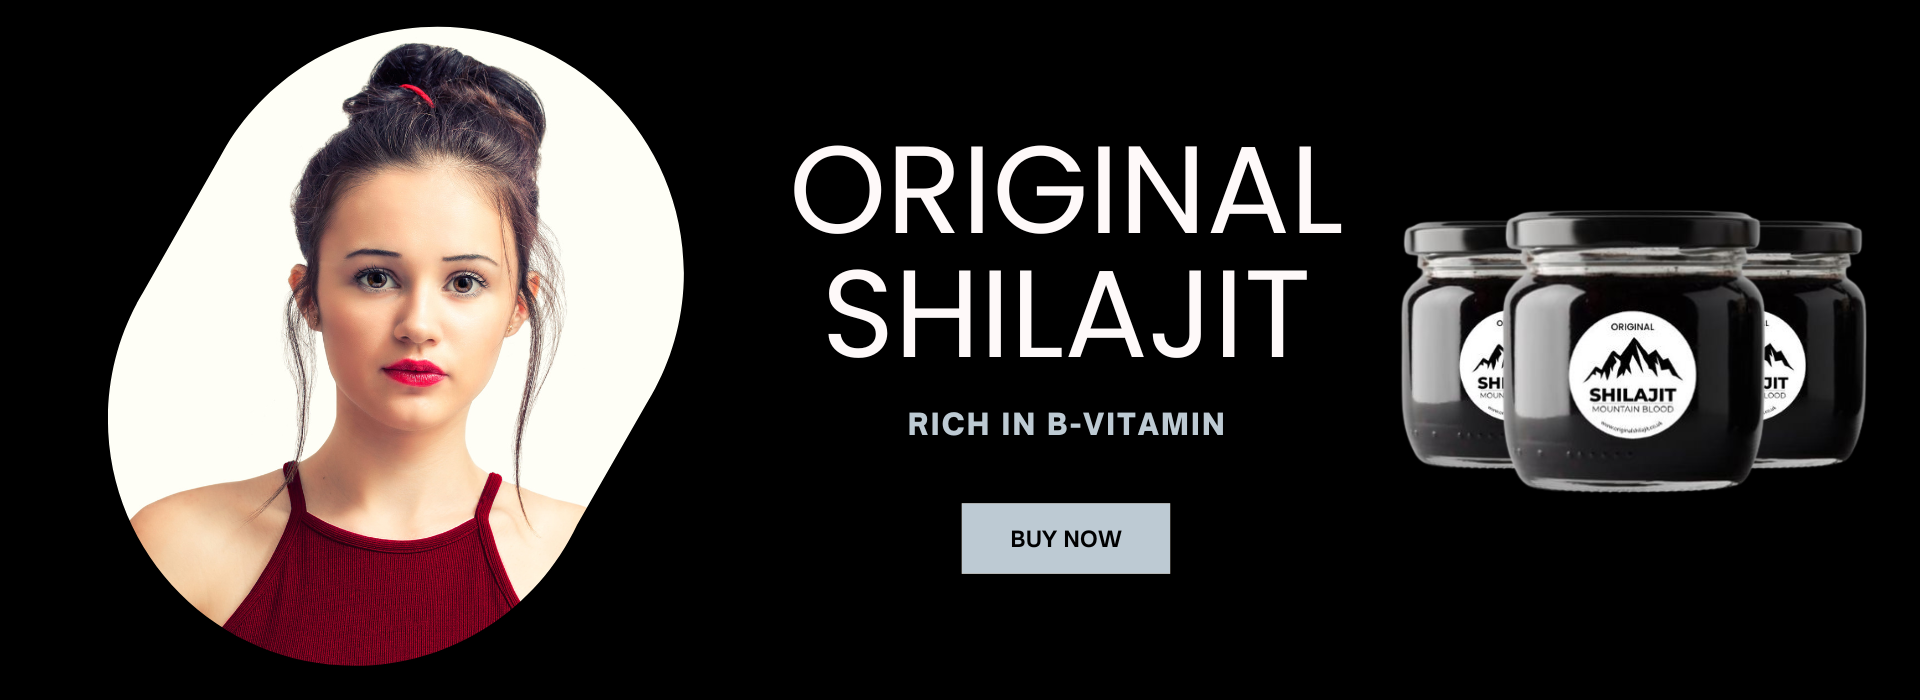 Original Shilajit Rich in B-Vitamin